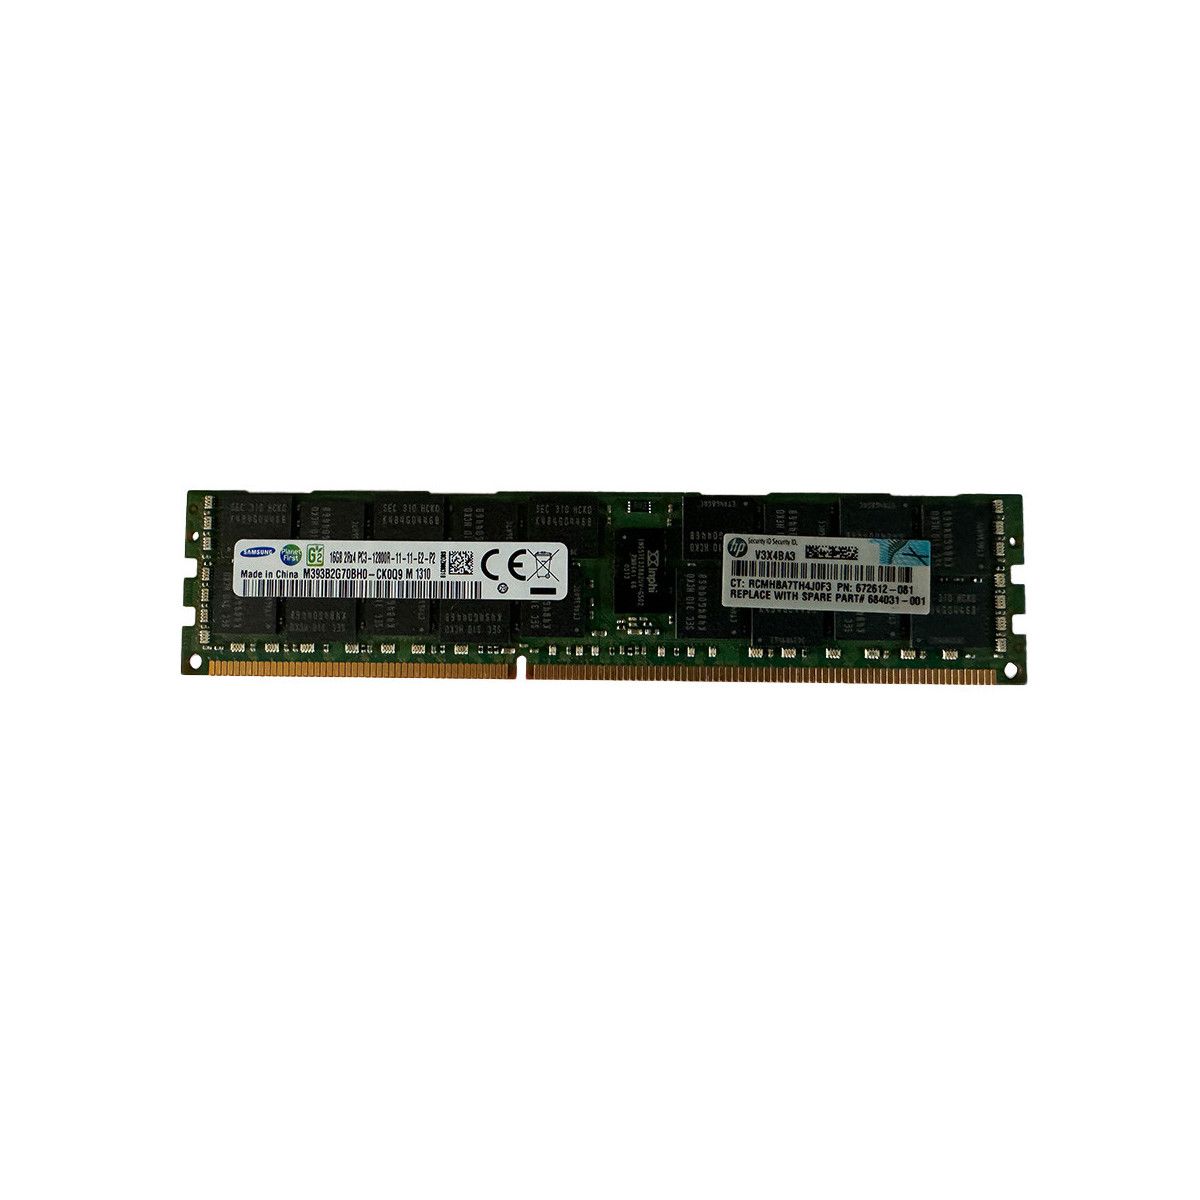 7102984-MS - Memstar 1x 16GB DDR3-1600 RDIMM PC3-12800R